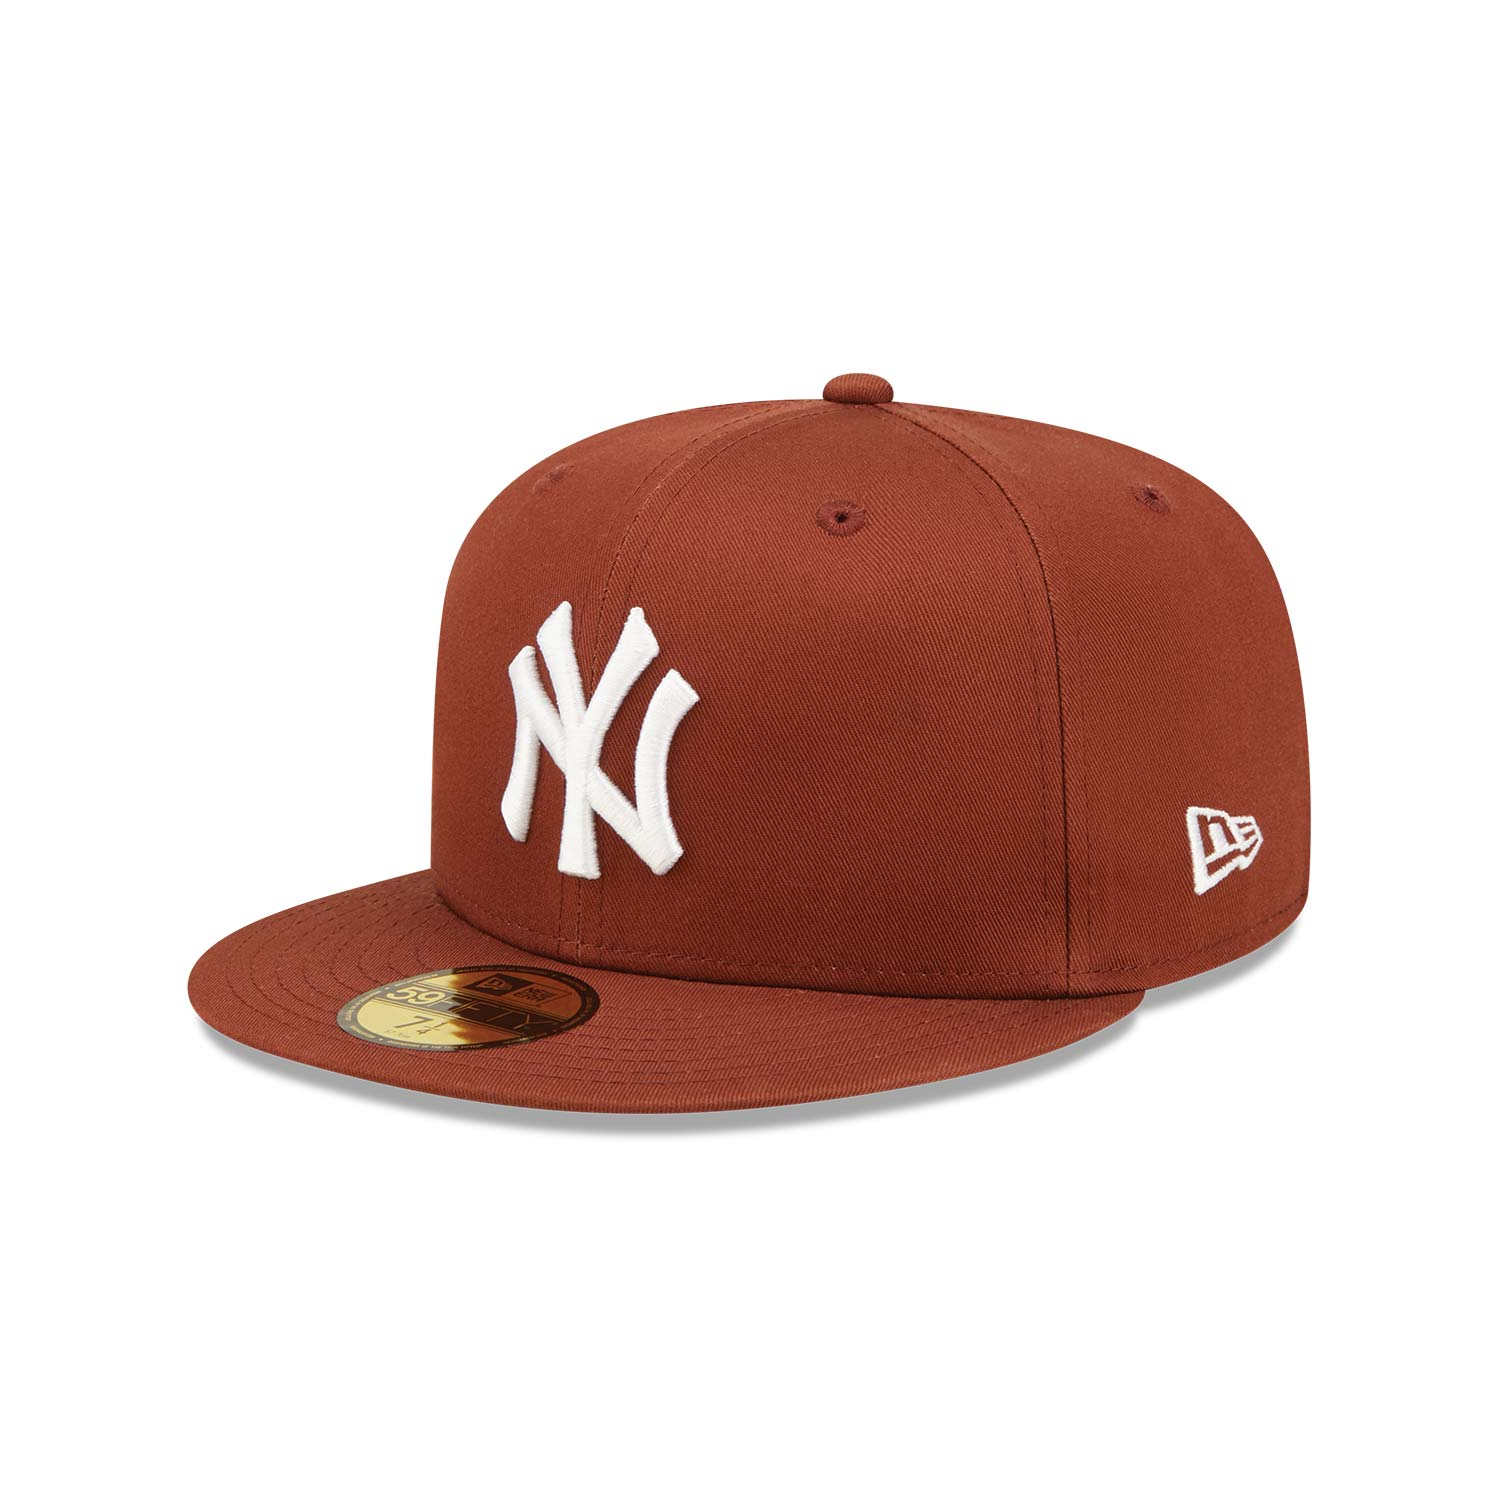 NEW ERA 59FIFTY MLB NEW YORK YANKEES INAUGURAL SEASON 2009 BROWN / BROWN UV FITTED CAP